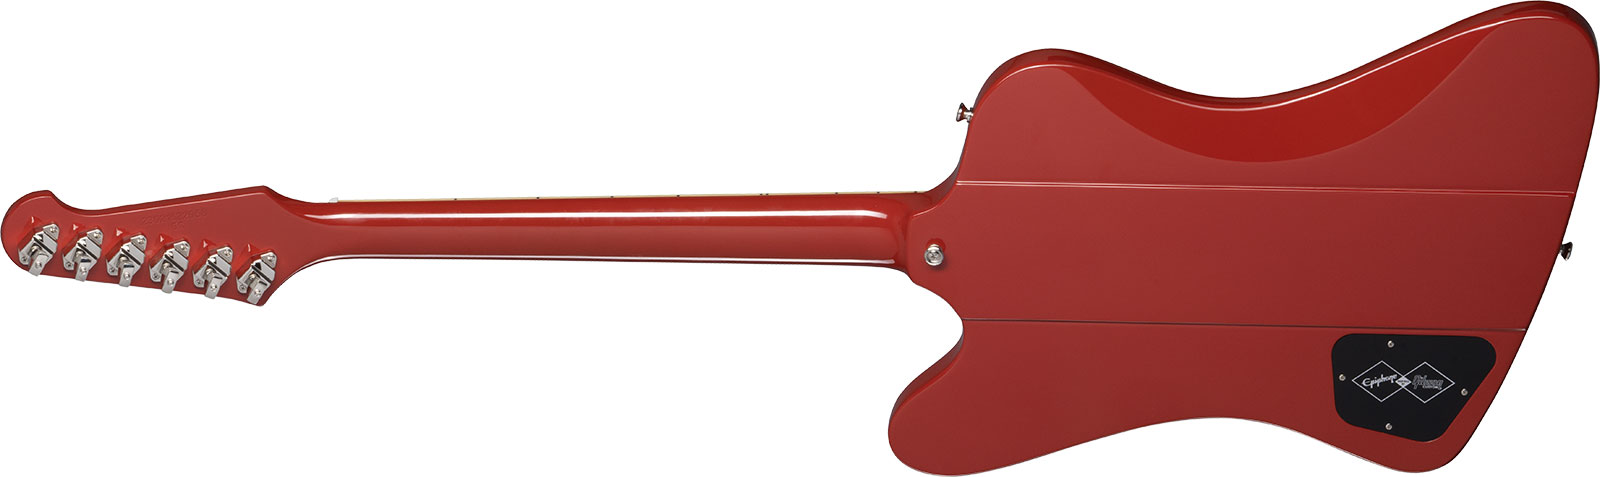 Epiphone Firebird V 1963 Maestro Vibrola Inspired By Gibson Custom 2mh Trem Lau - Ember Red - Retro-rock elektrische gitaar - Variation 1